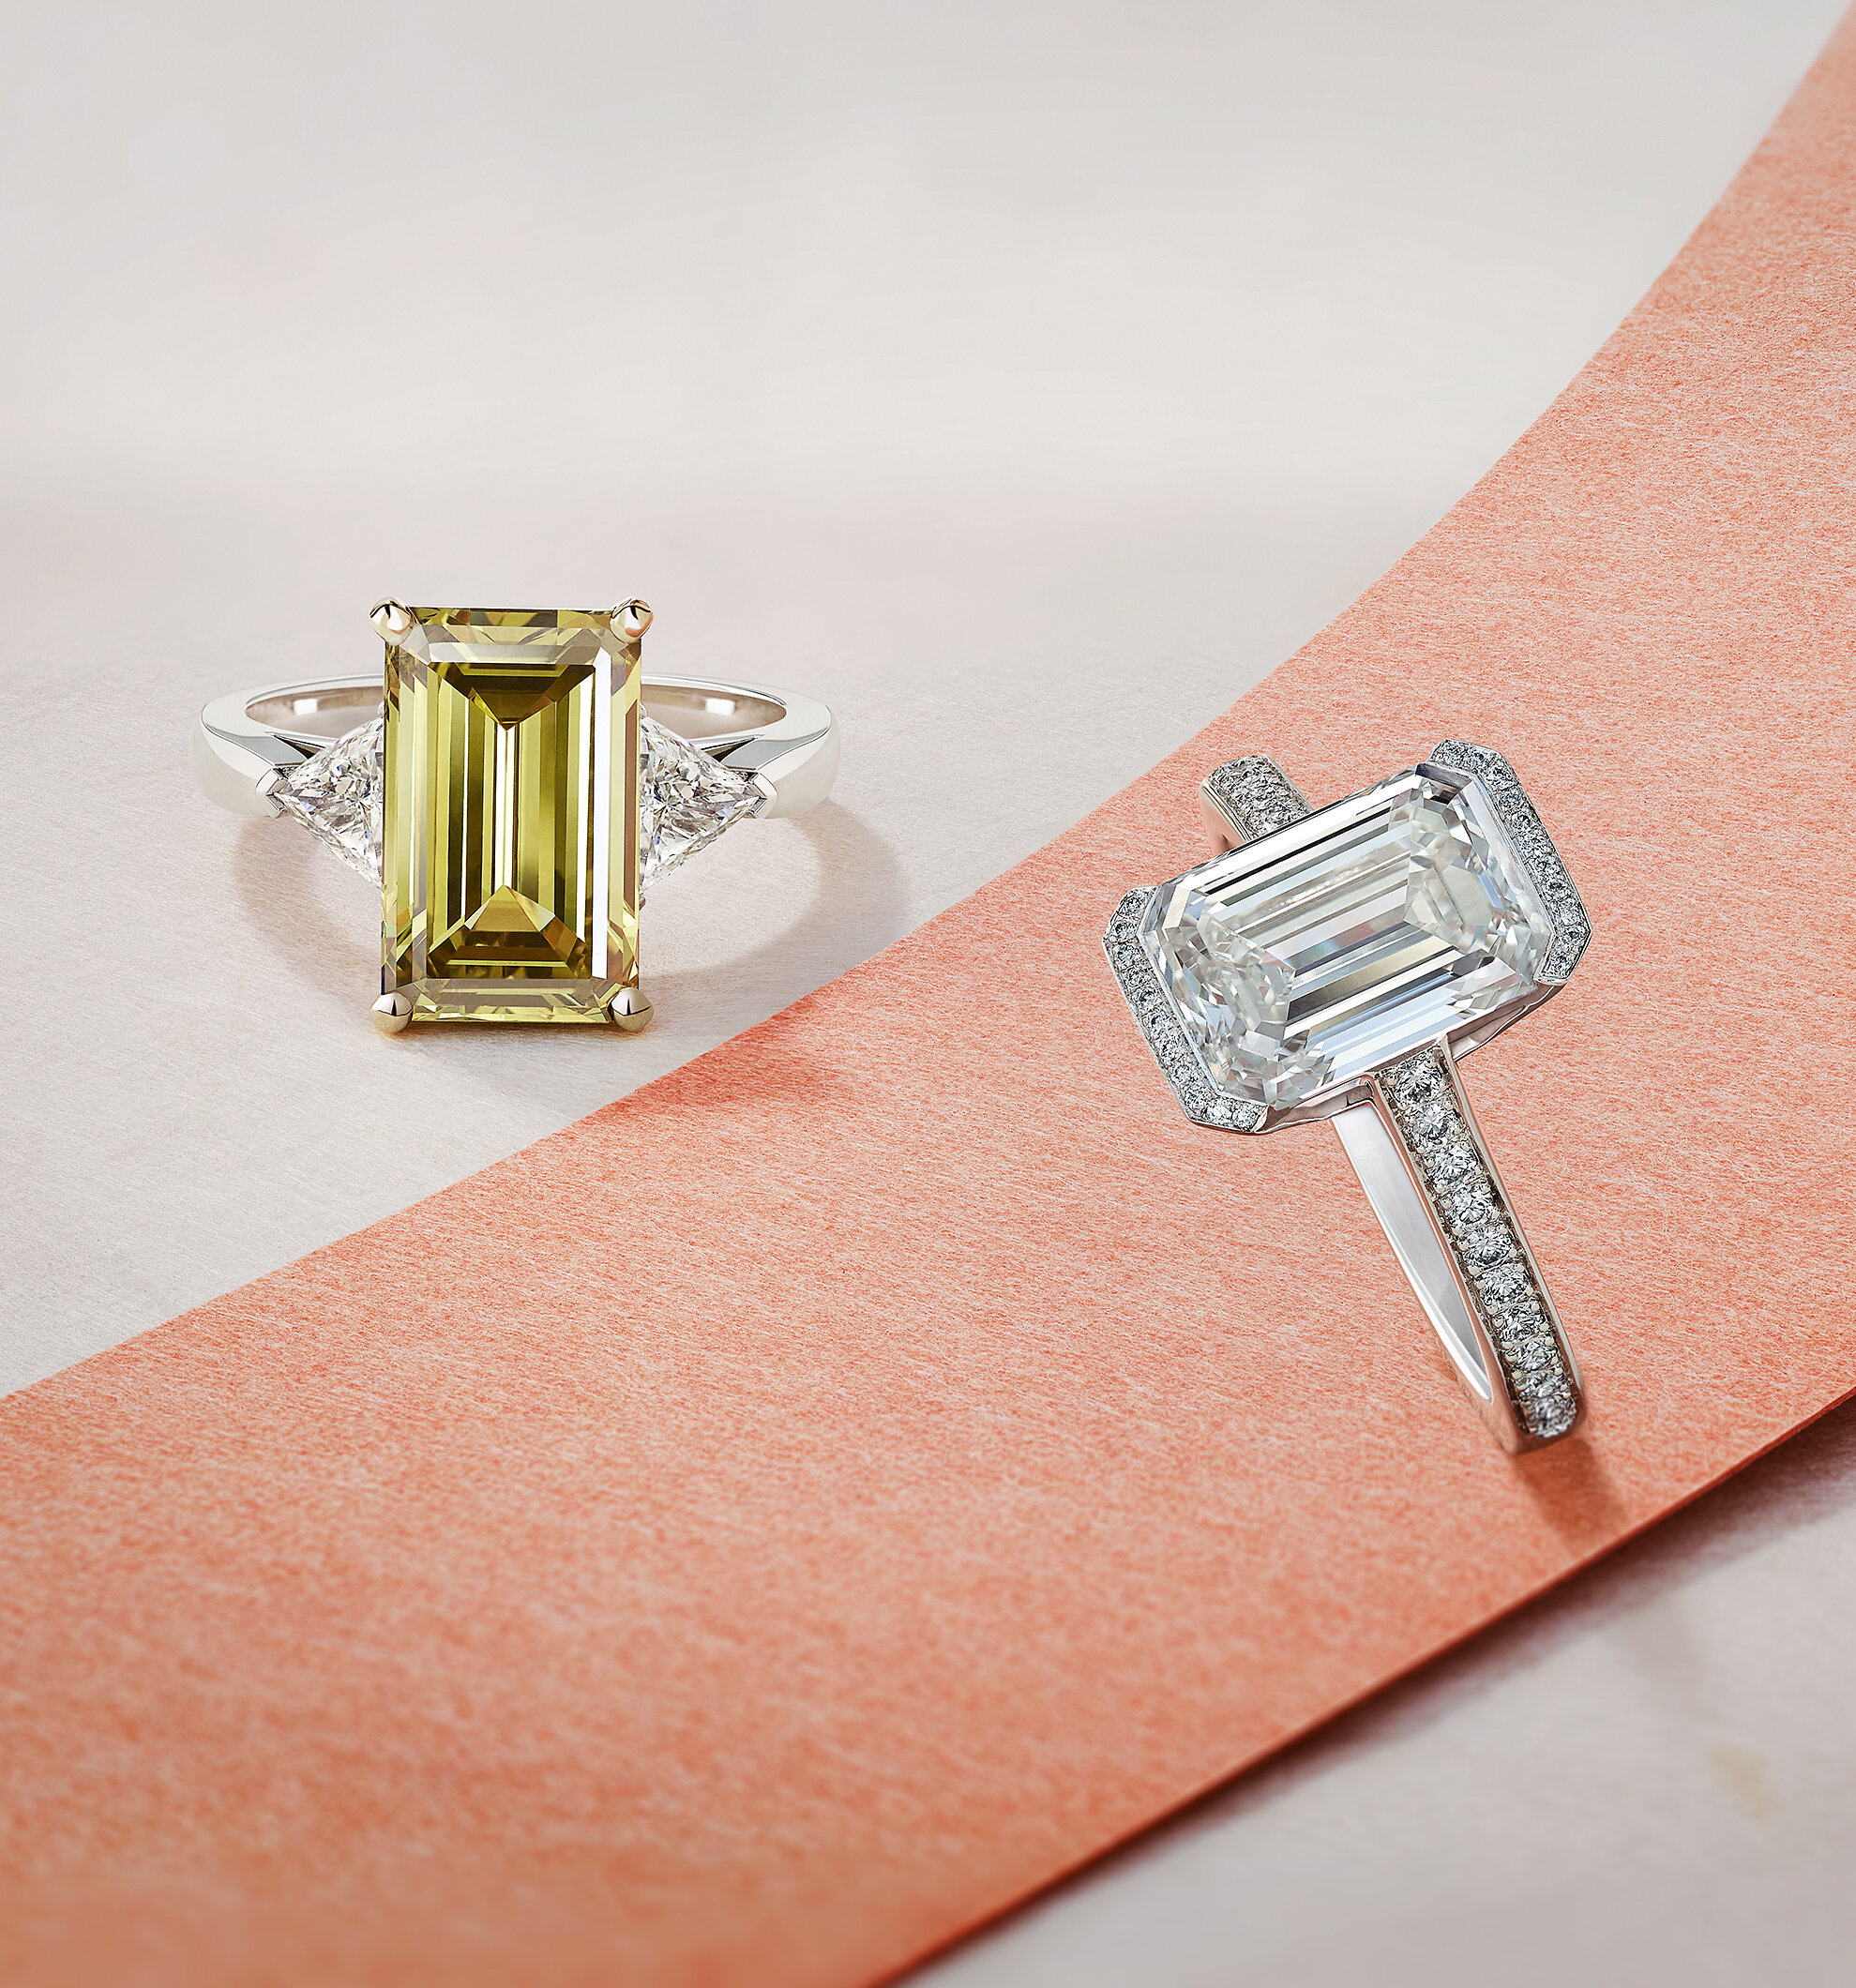  Emerald diamond engagement rings shot for De Beers 